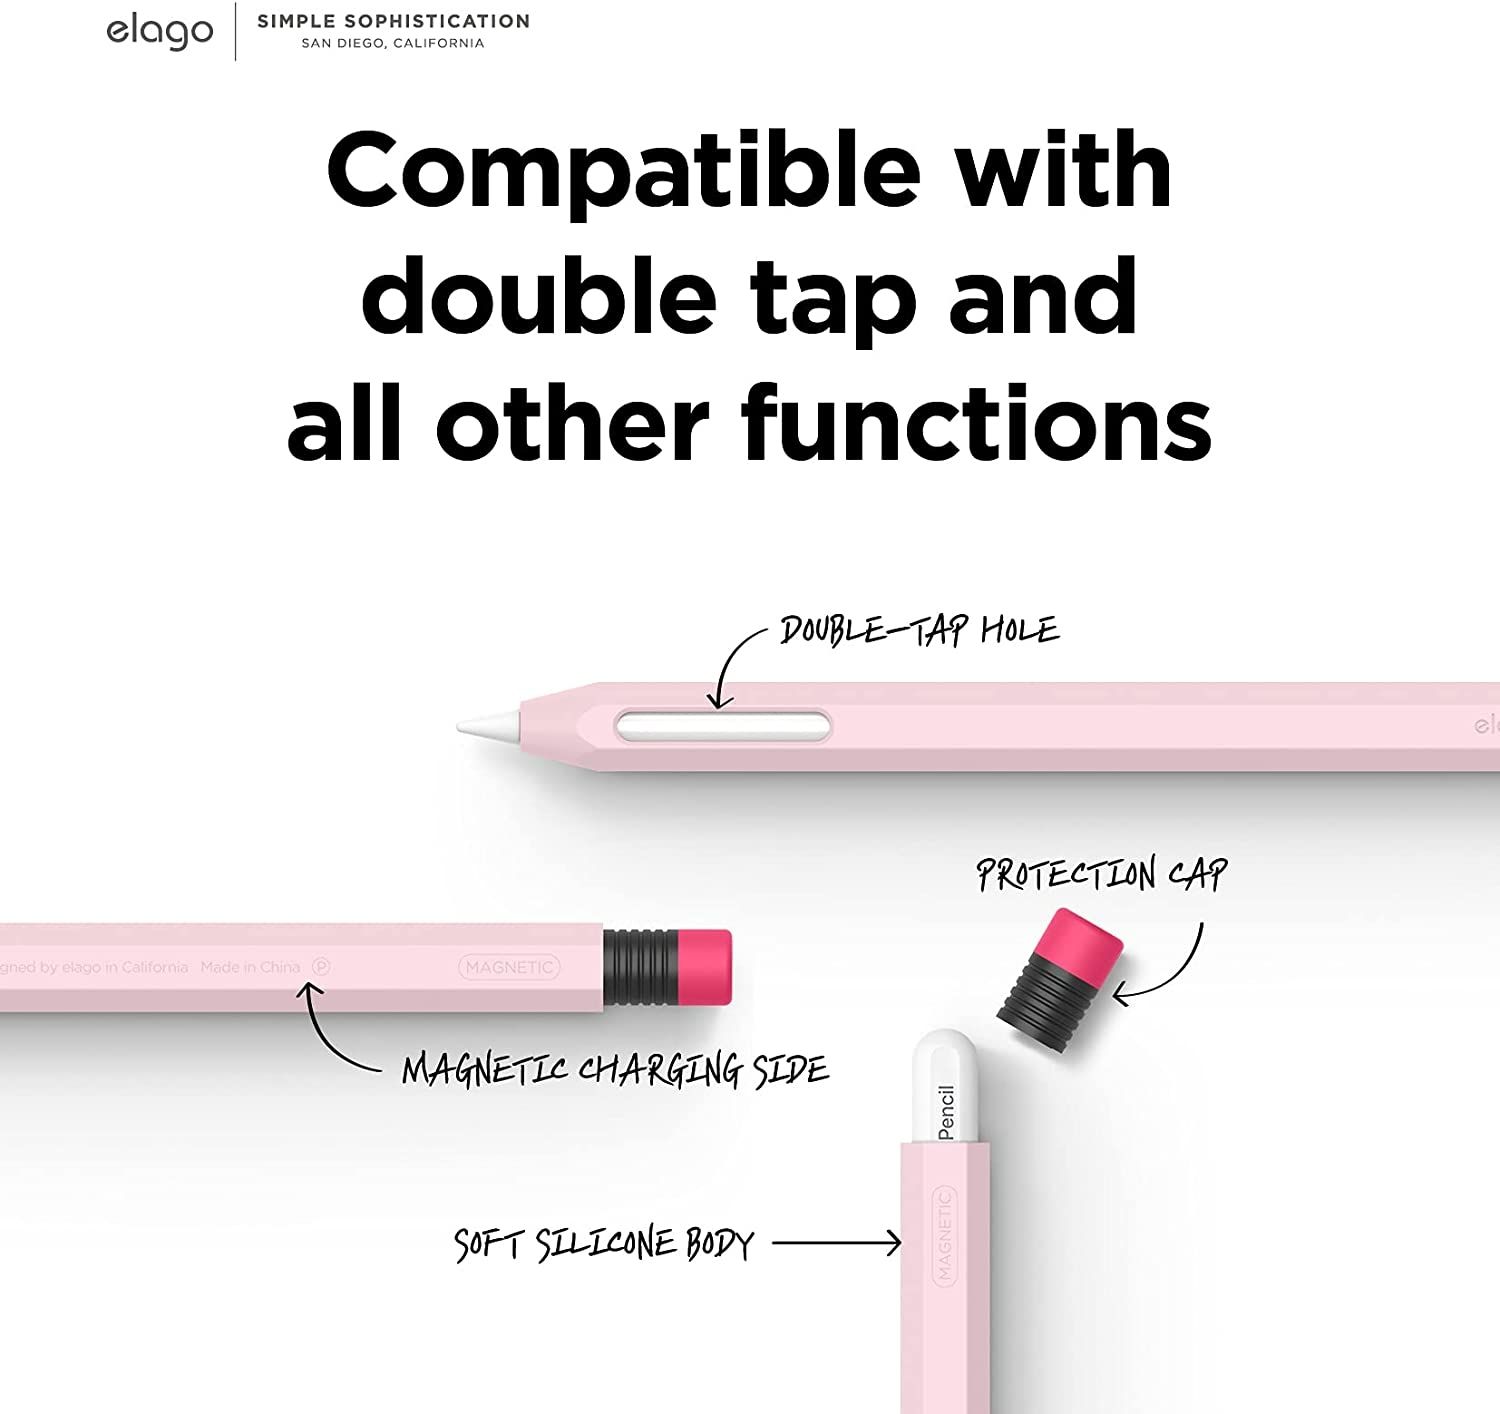 elago-classic-thiki-premium-silikonis-apple-pencil-2nd-gen-lovely-pink-3.jpg